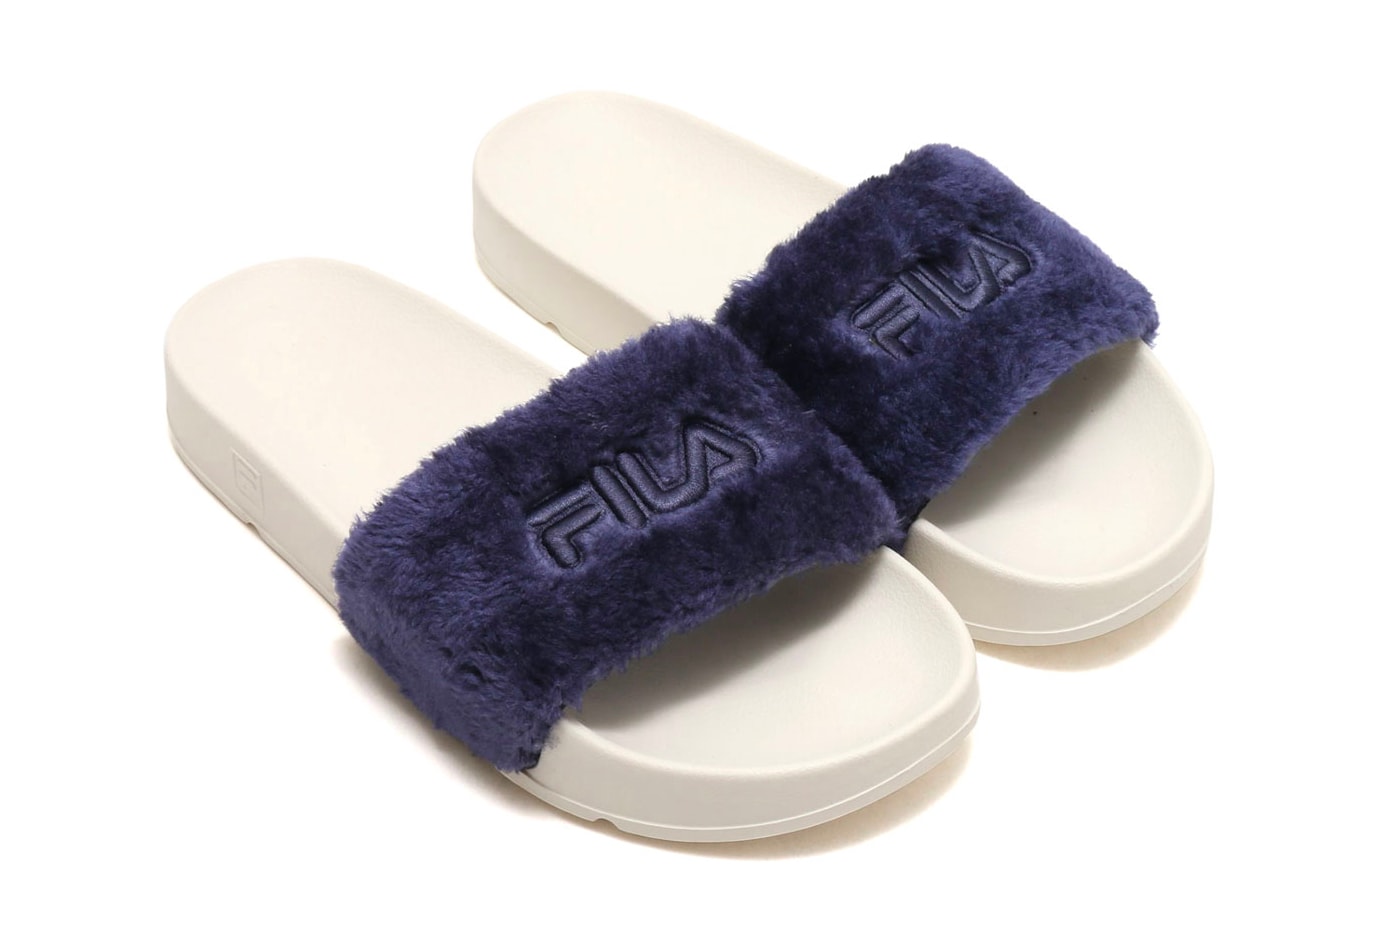 FILA Drifter Fur Slides Navy Blue Light Shop Price Where to Buy Release atmos Sandals Slippers Japan Summer 2018